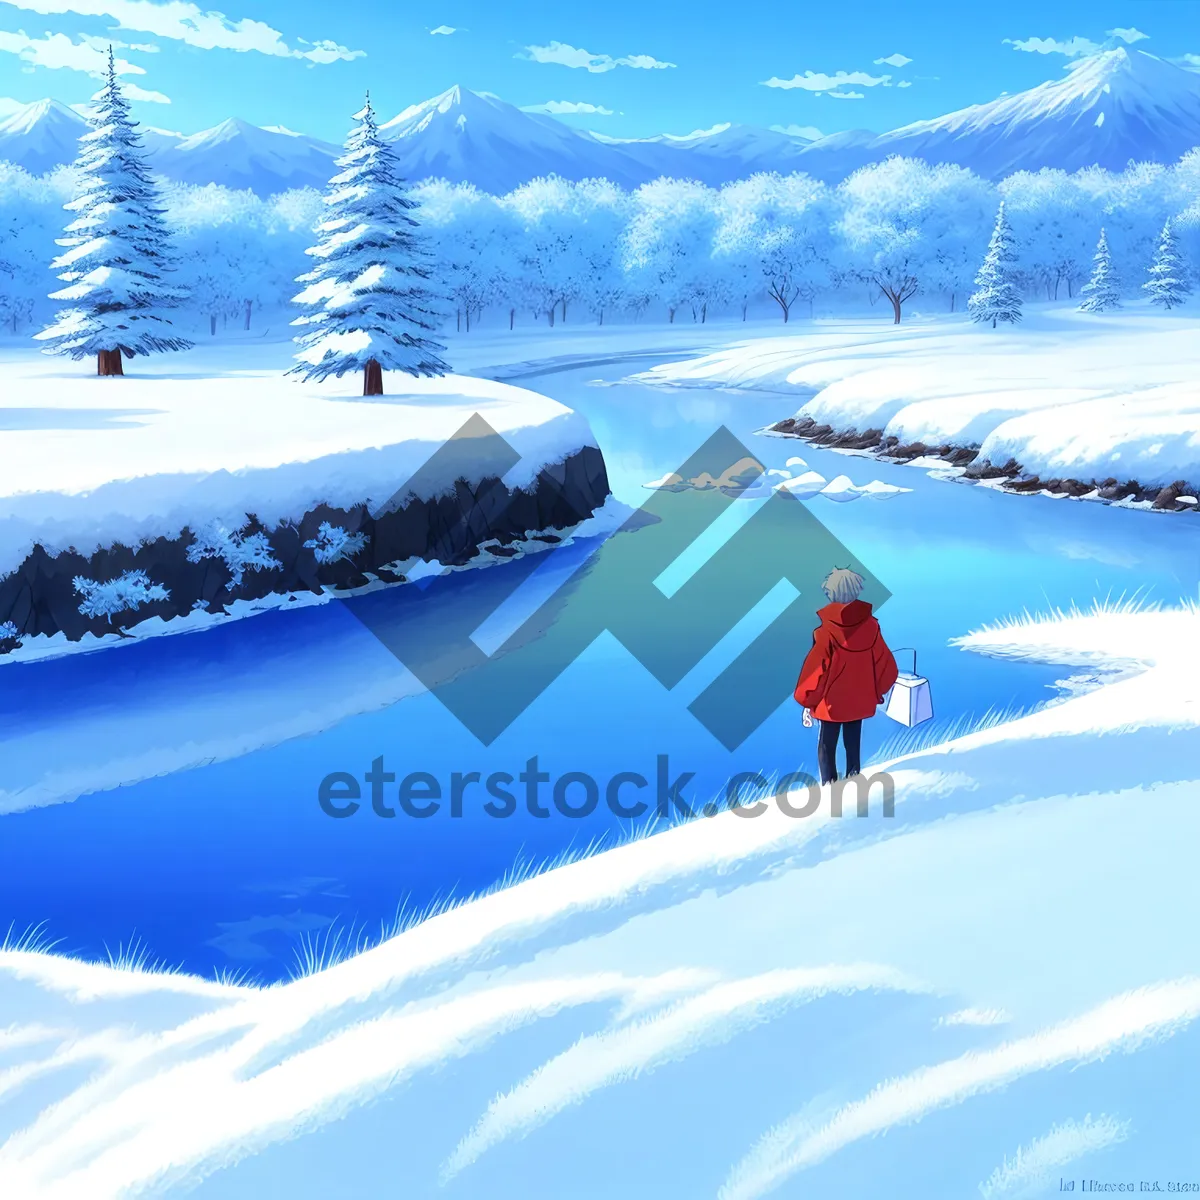 Picture of Winter Wonderland: Majestic Alpine Mountain Landscape